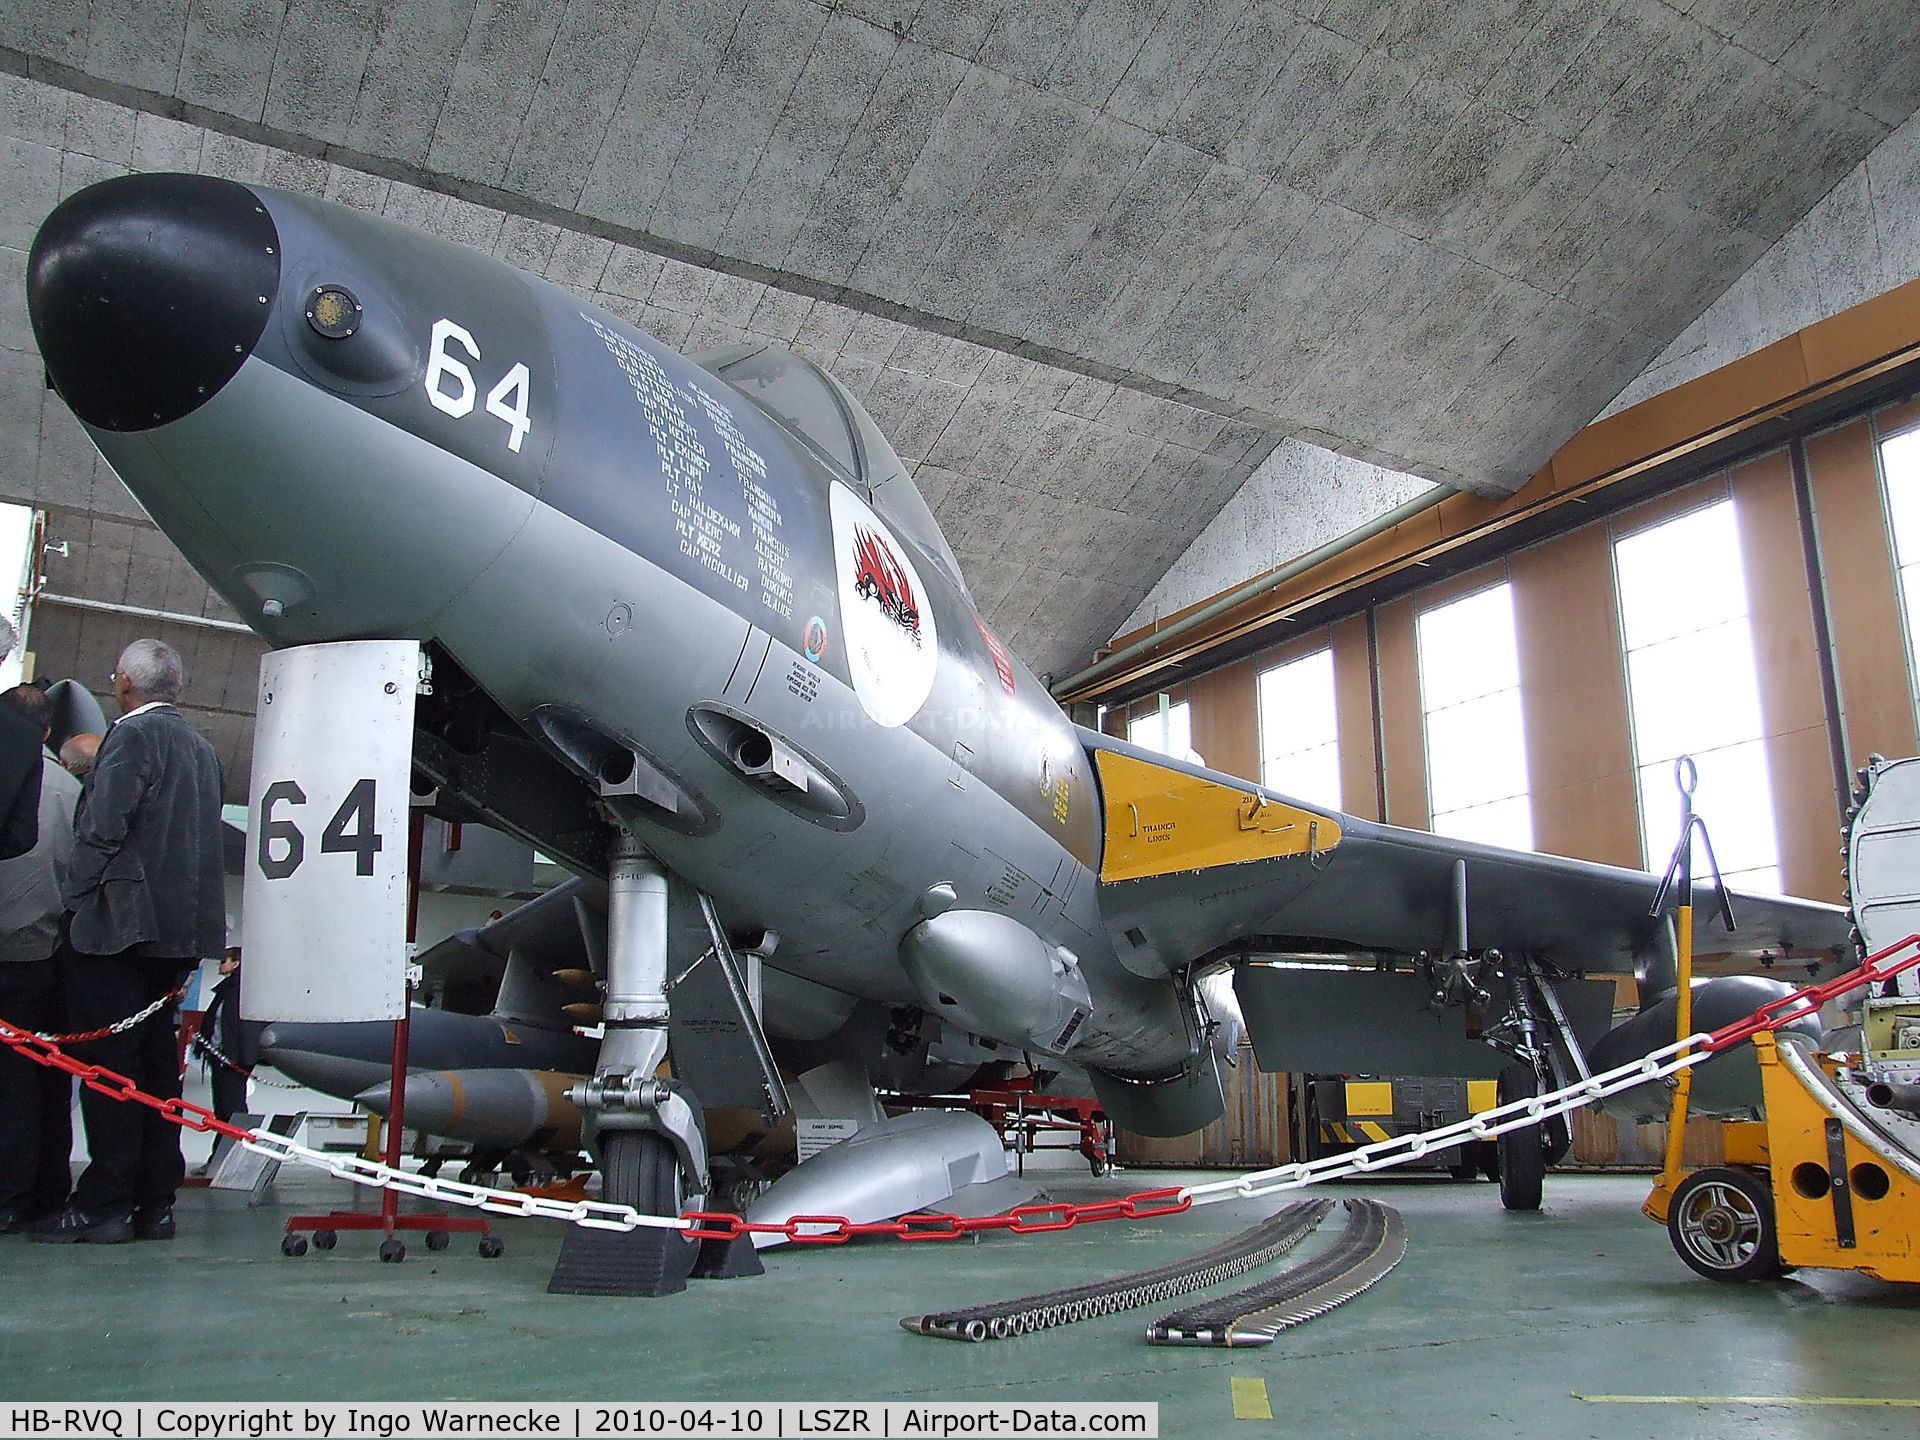 HB-RVQ, 1958 Hawker Hunter F.58 C/N 41-H697451, Hawker Hunter F58 ex-Flugwaffe at the Fliegermuseum Altenrhein